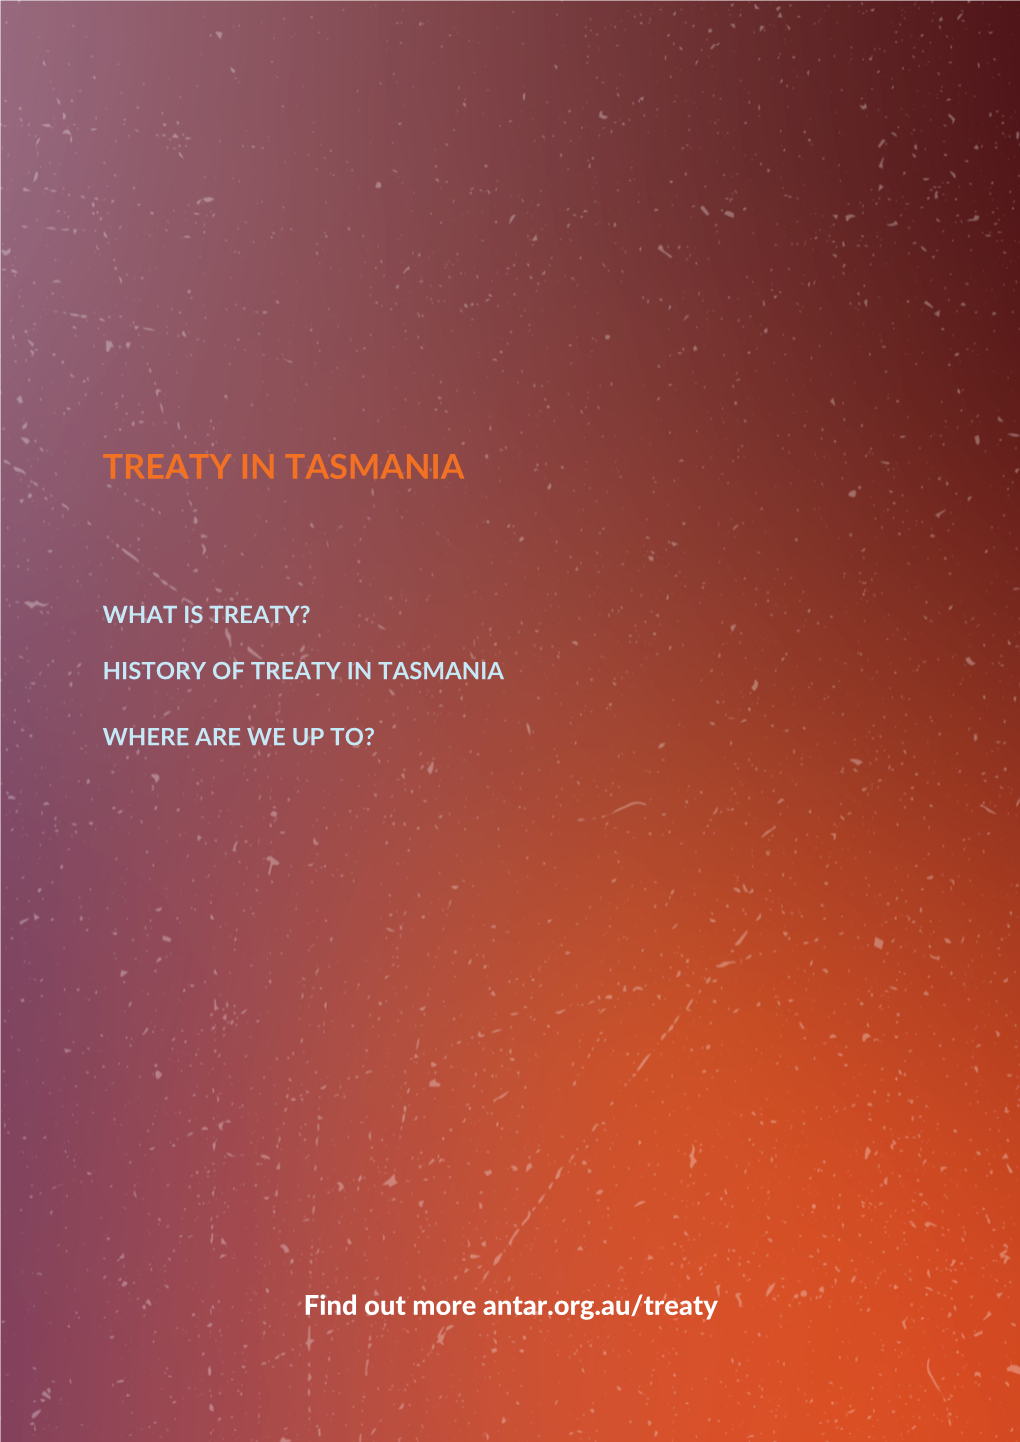 Treaty in Tasmania